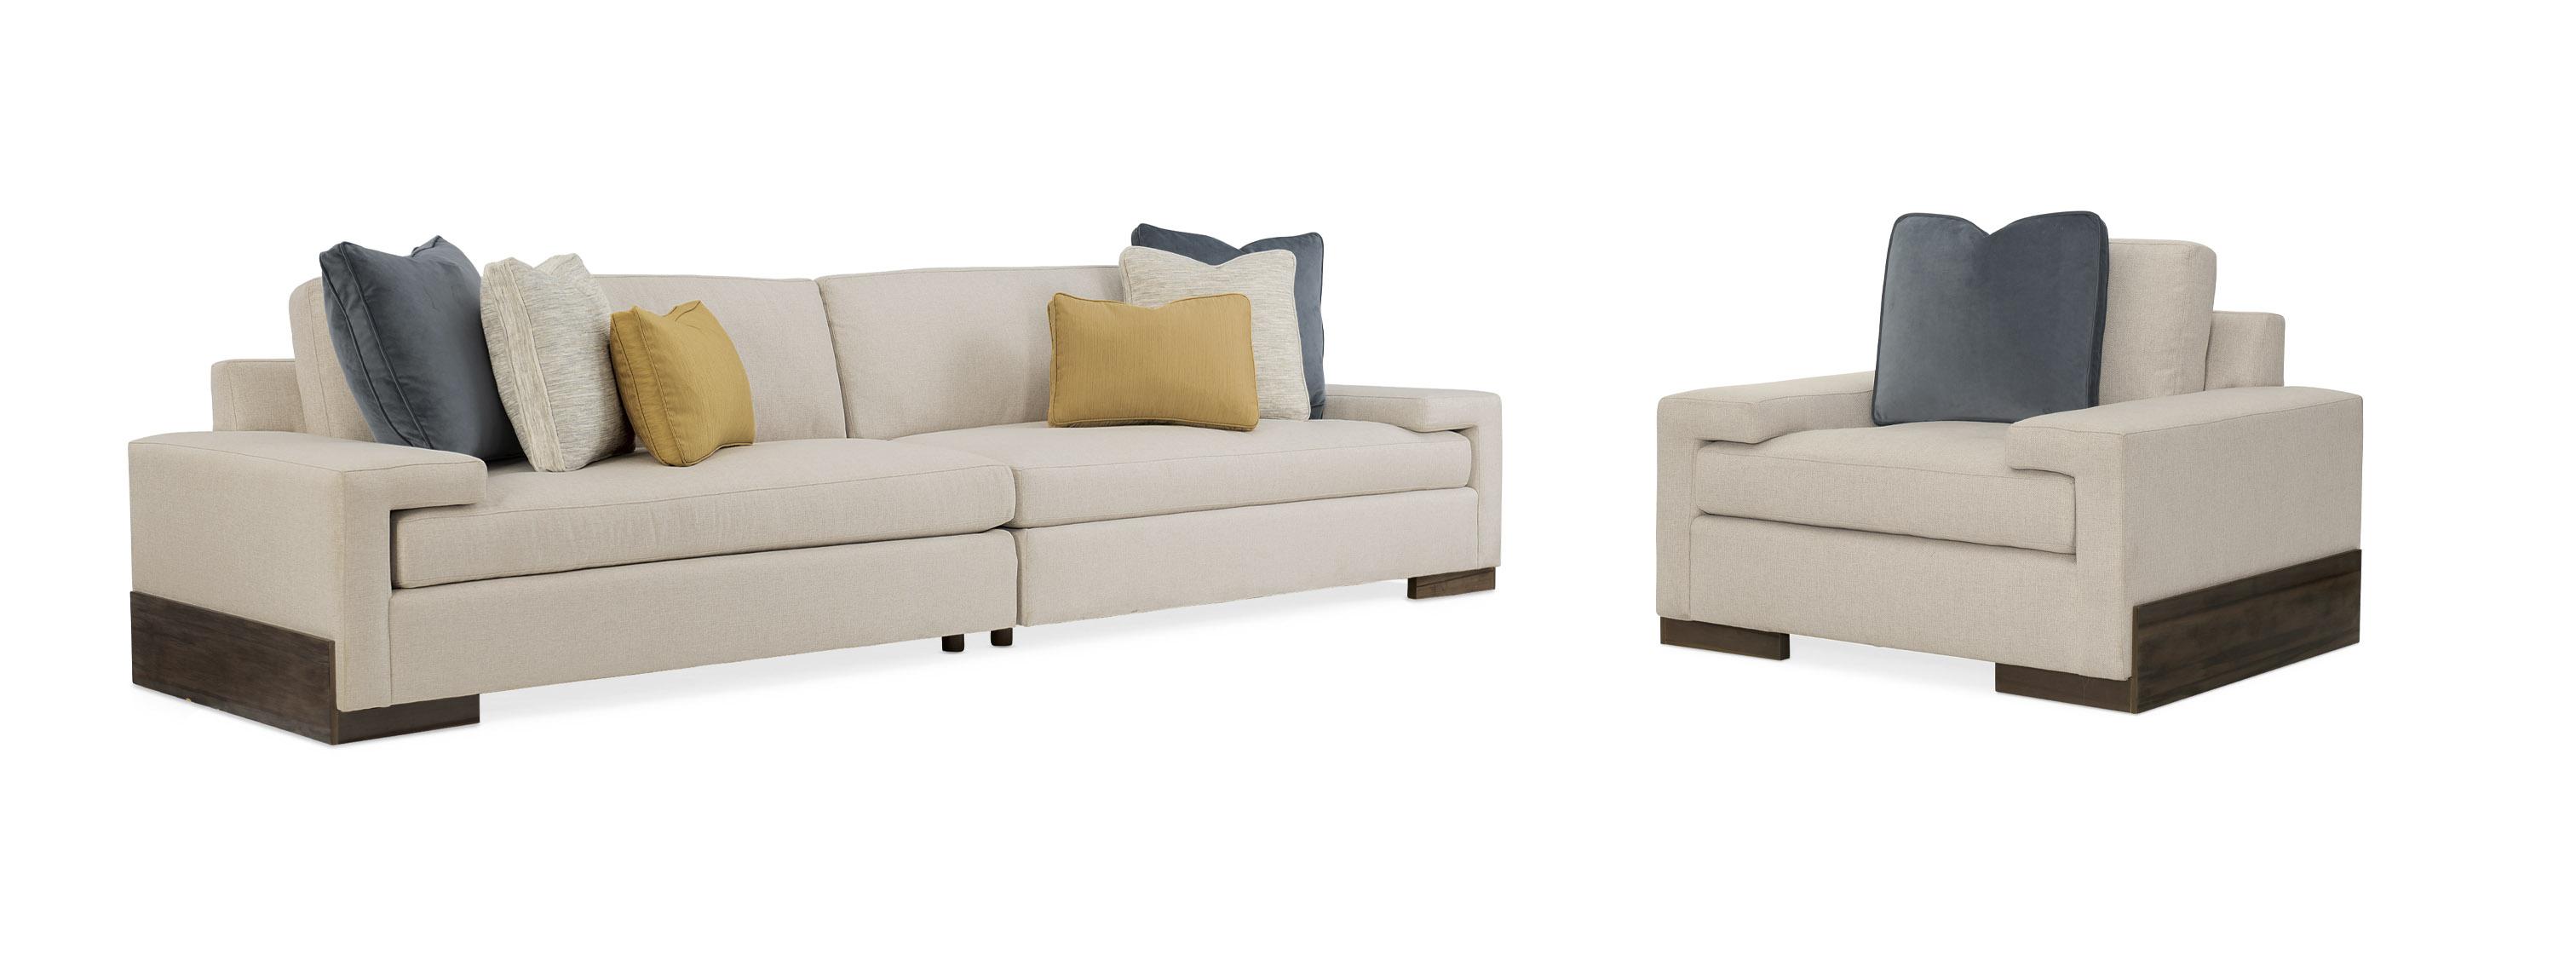 Contemporary Sectional Sofa Set I'M SHELF-ISH M090-018-SEC2-A-Set-2 in Sable Fabric